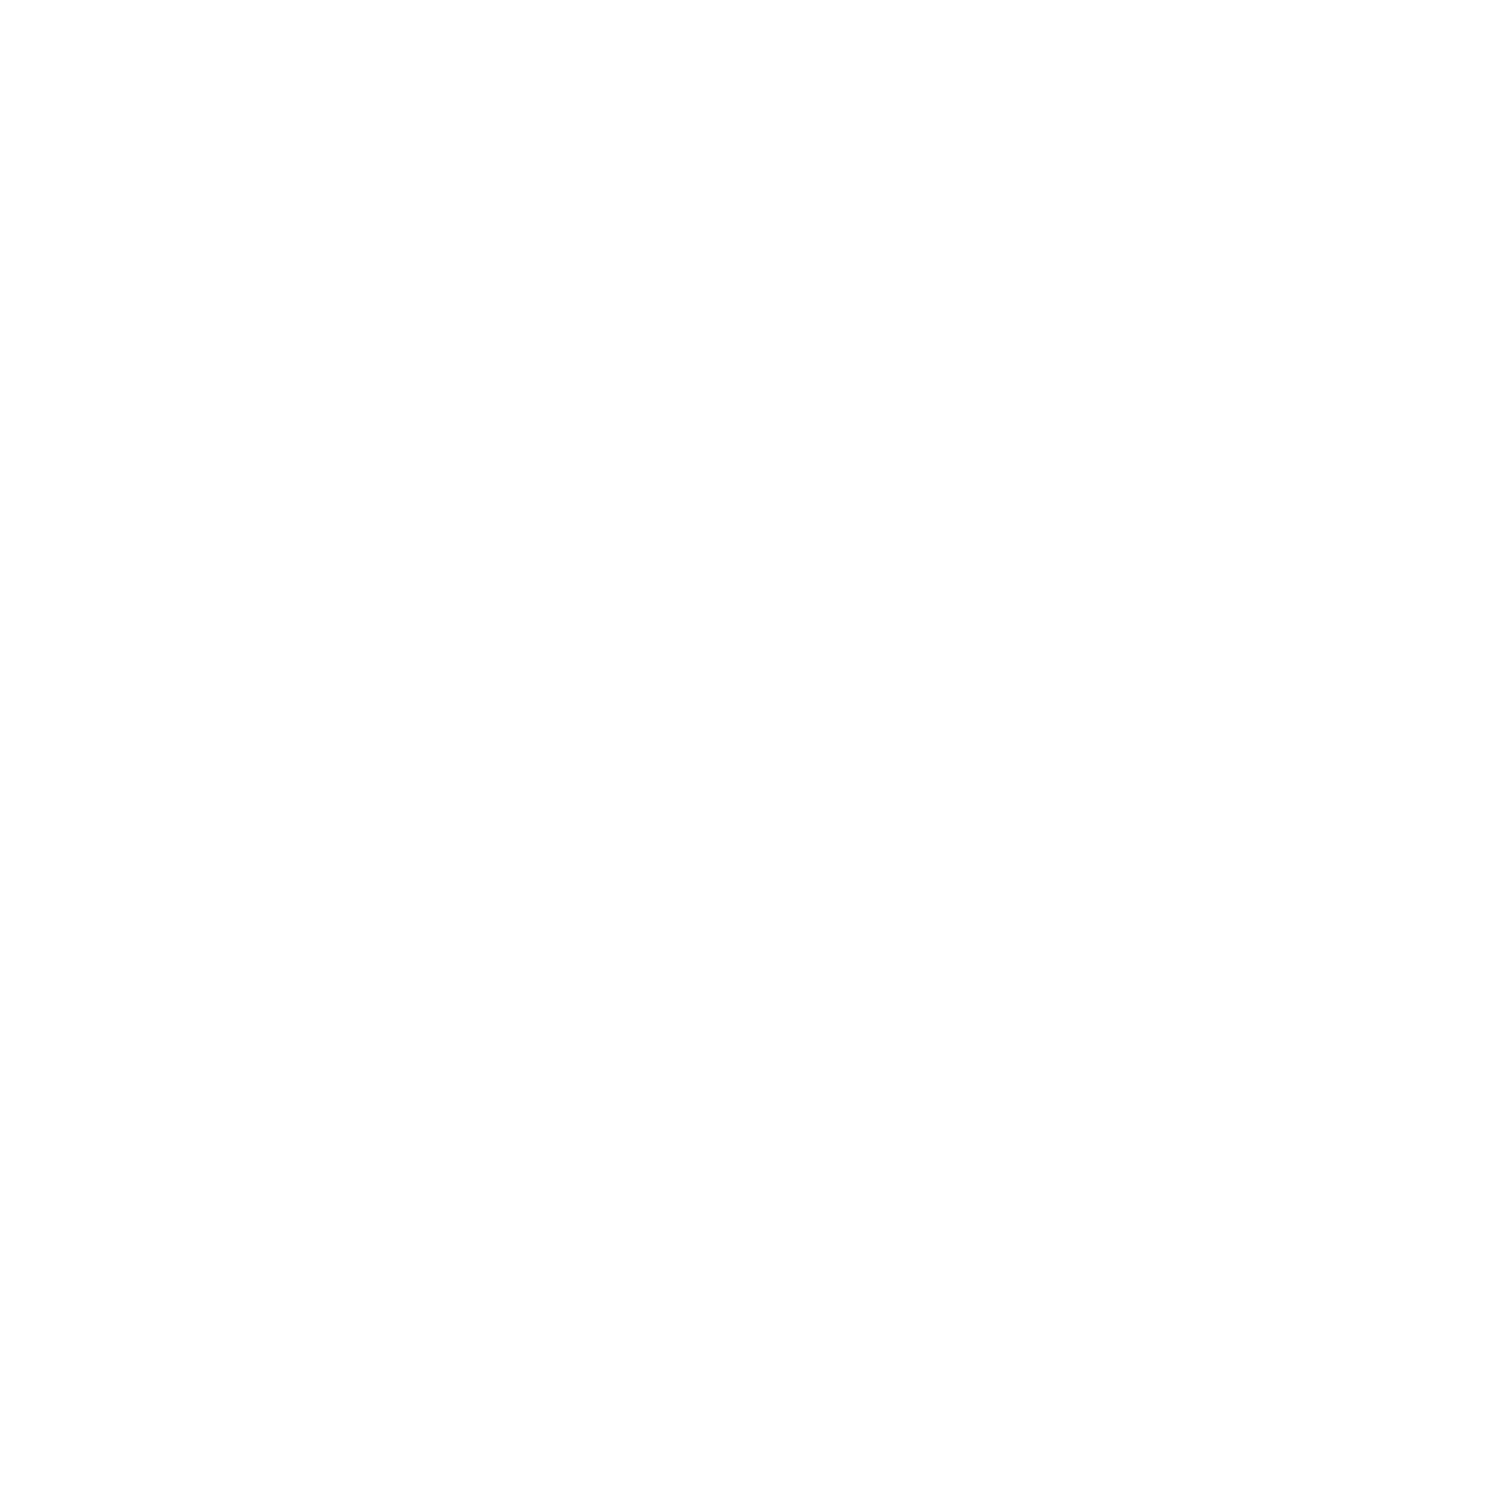 Vapotherm logo for dark backgrounds (transparent PNG)